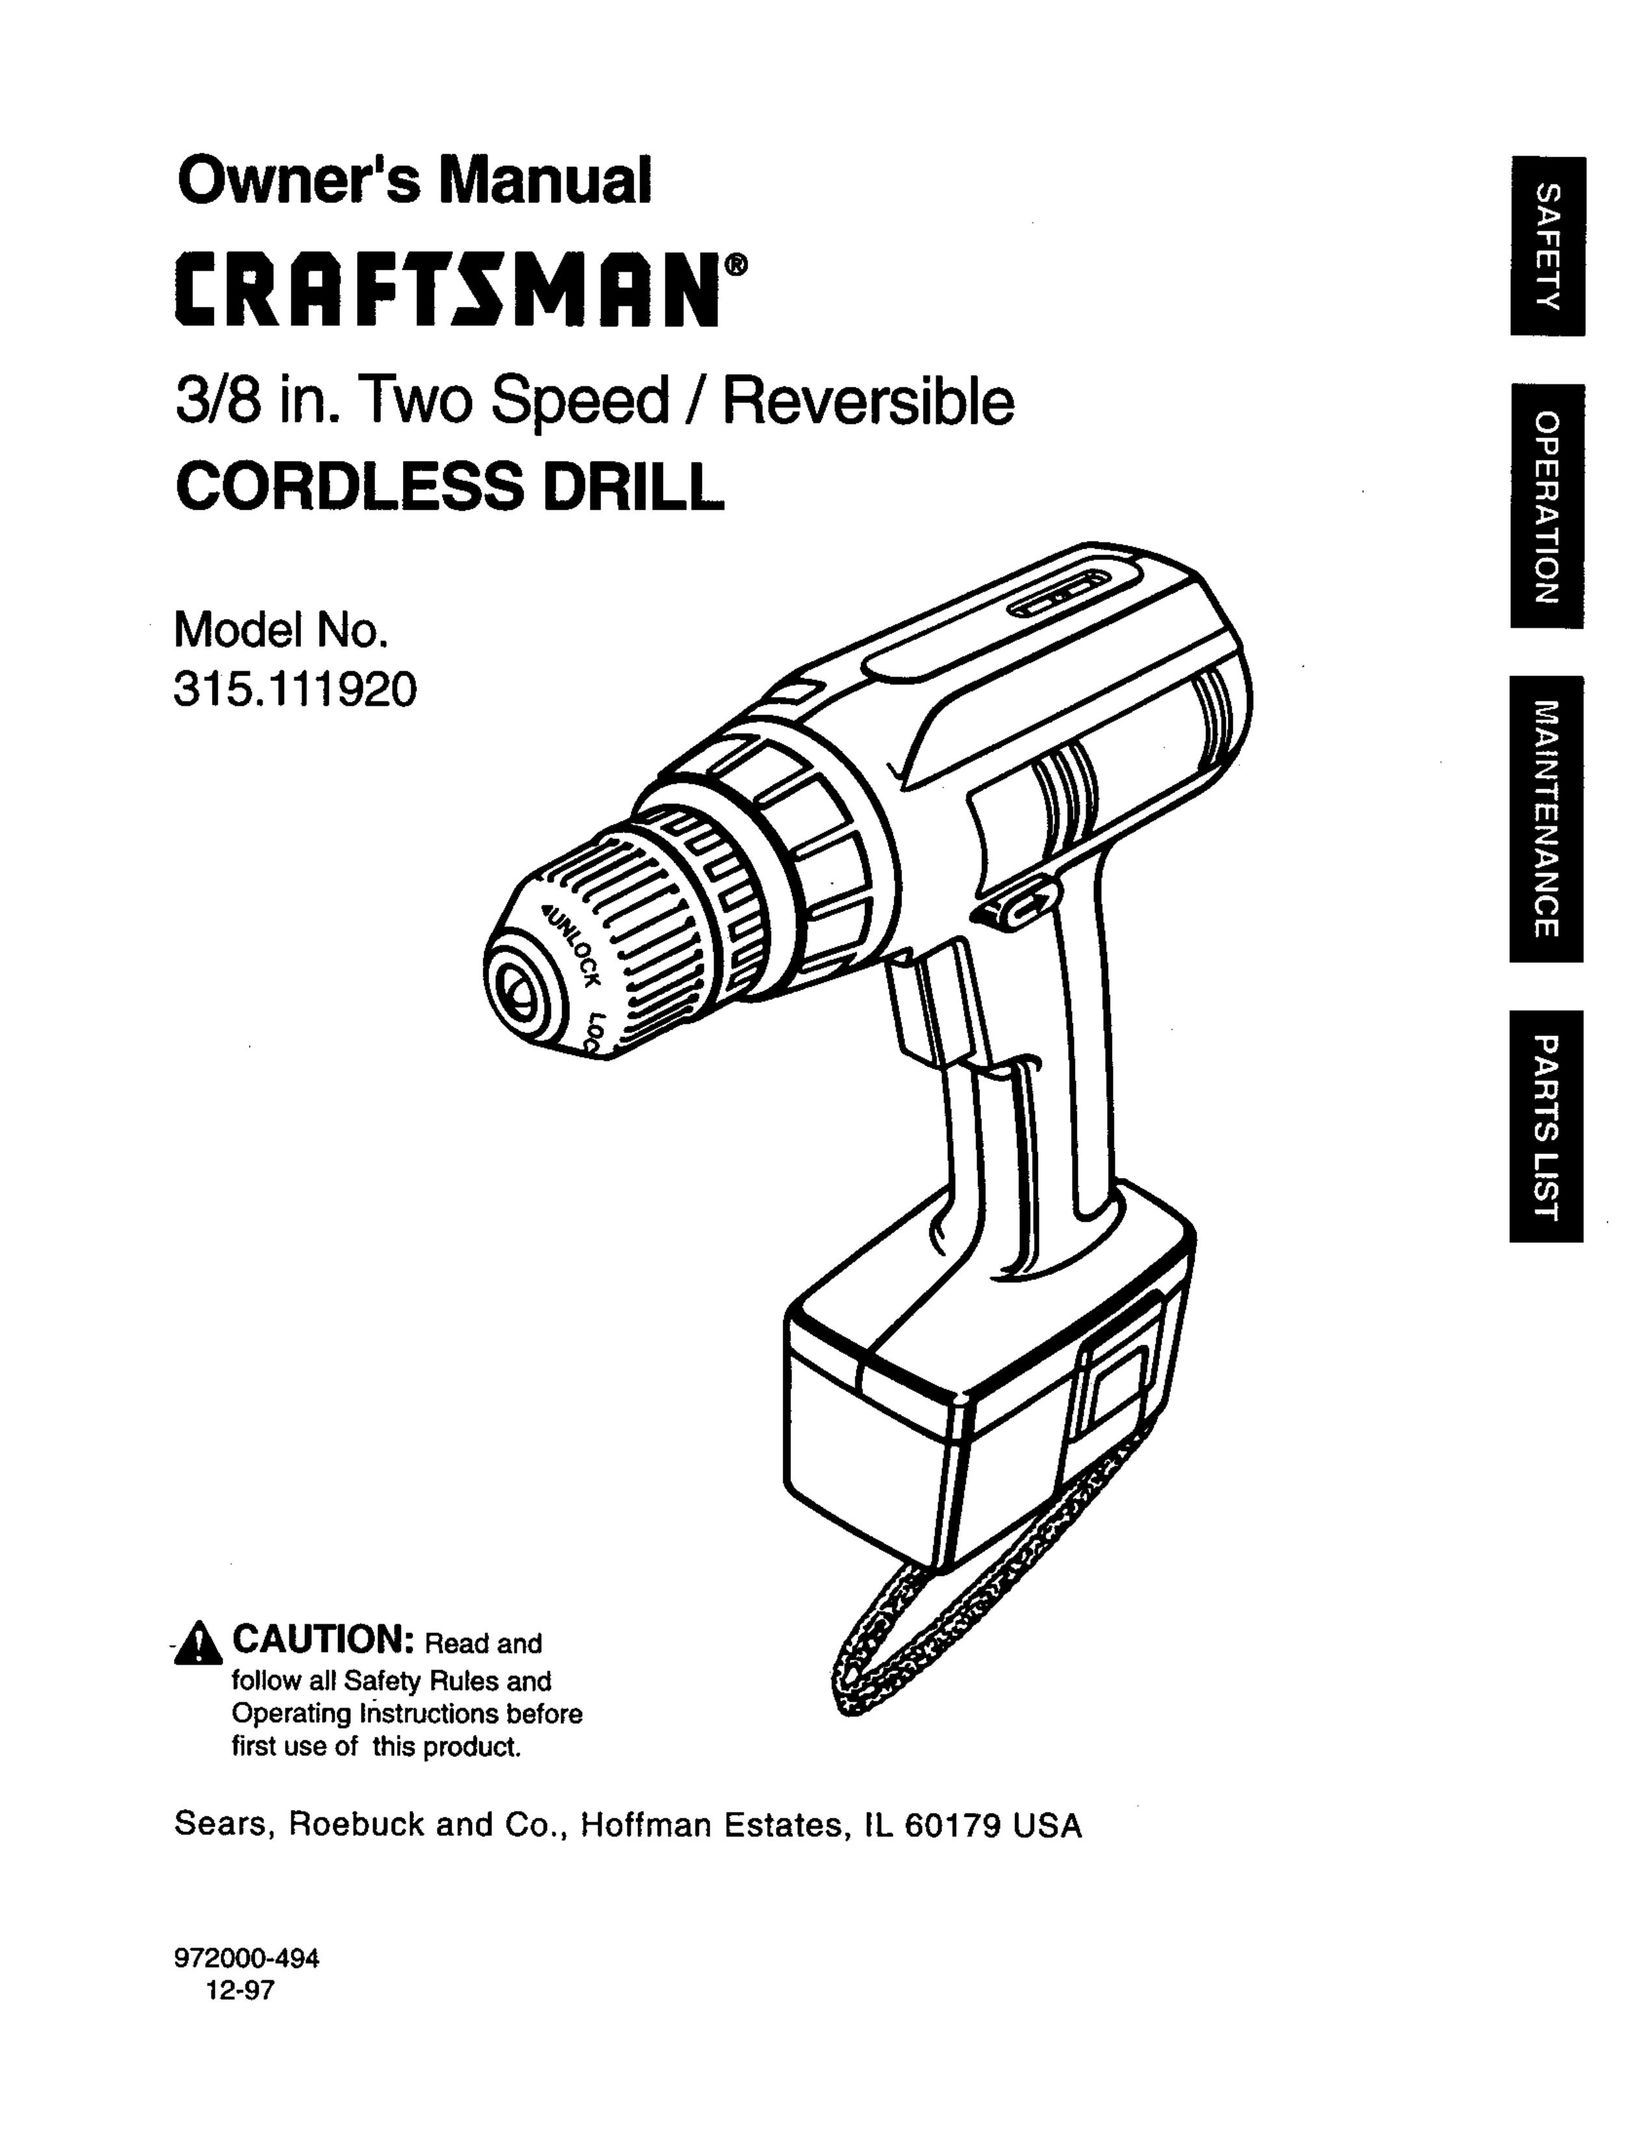 Craftsman 315.111920 Cordless Drill User Manual